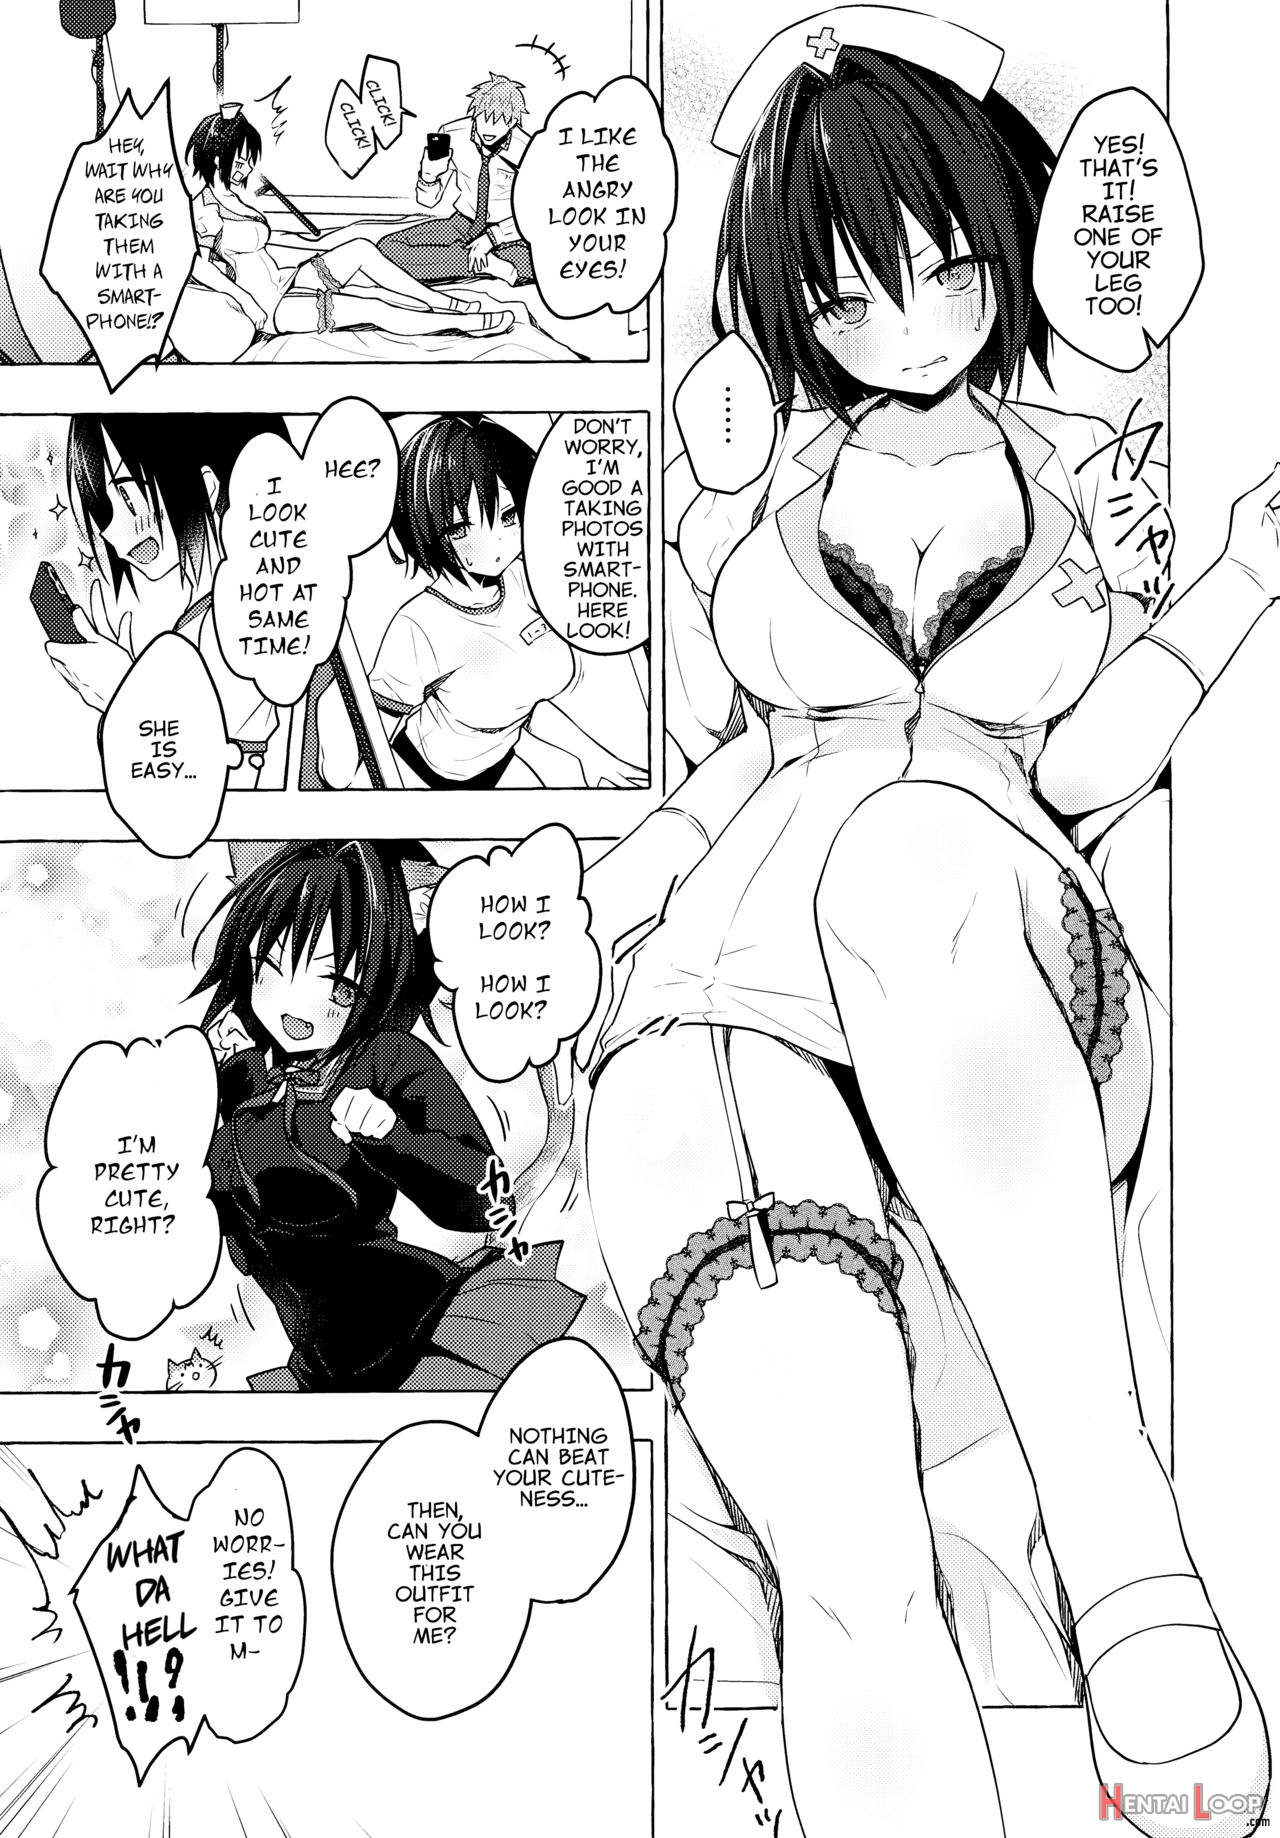 Akira-kun's Sex Life 4 page 8